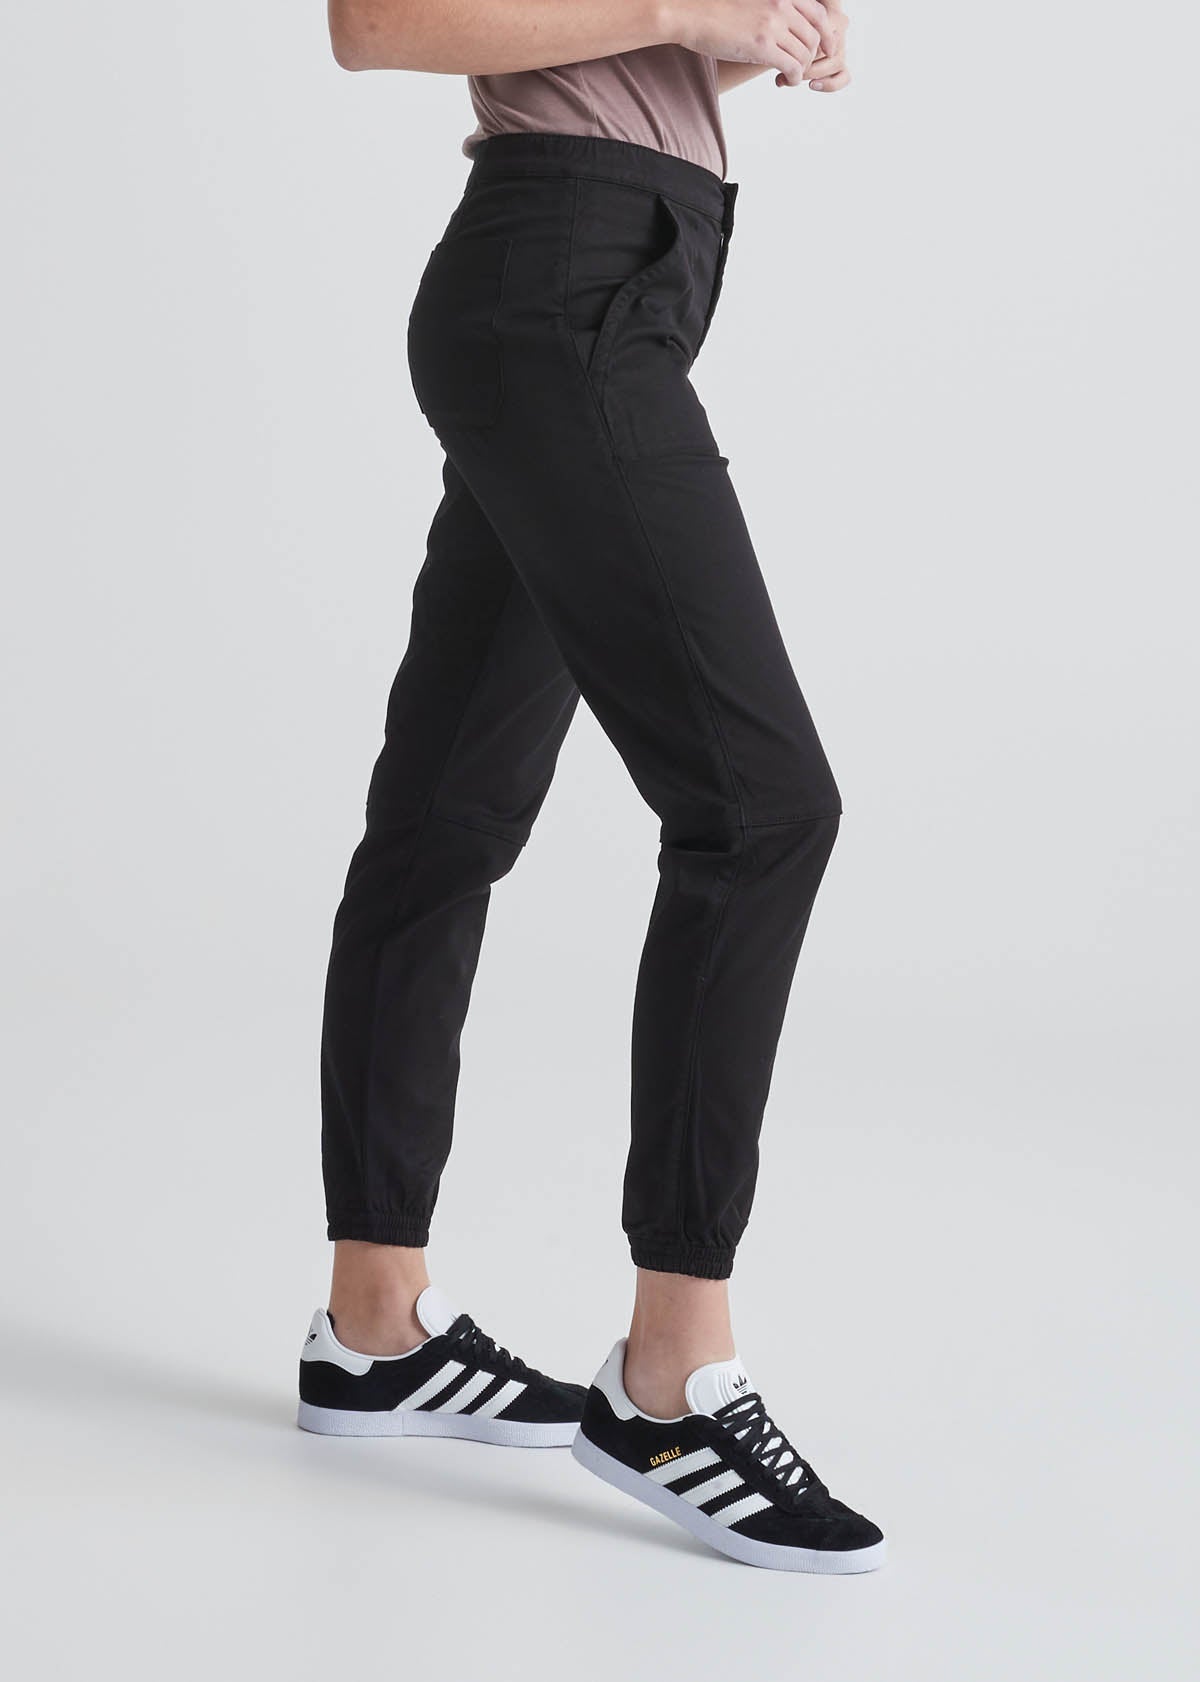 Athletic Works, Pants & Jumpsuits, Athletic Works Womens Sz 2 Nwt Olive  Color Capri Pants